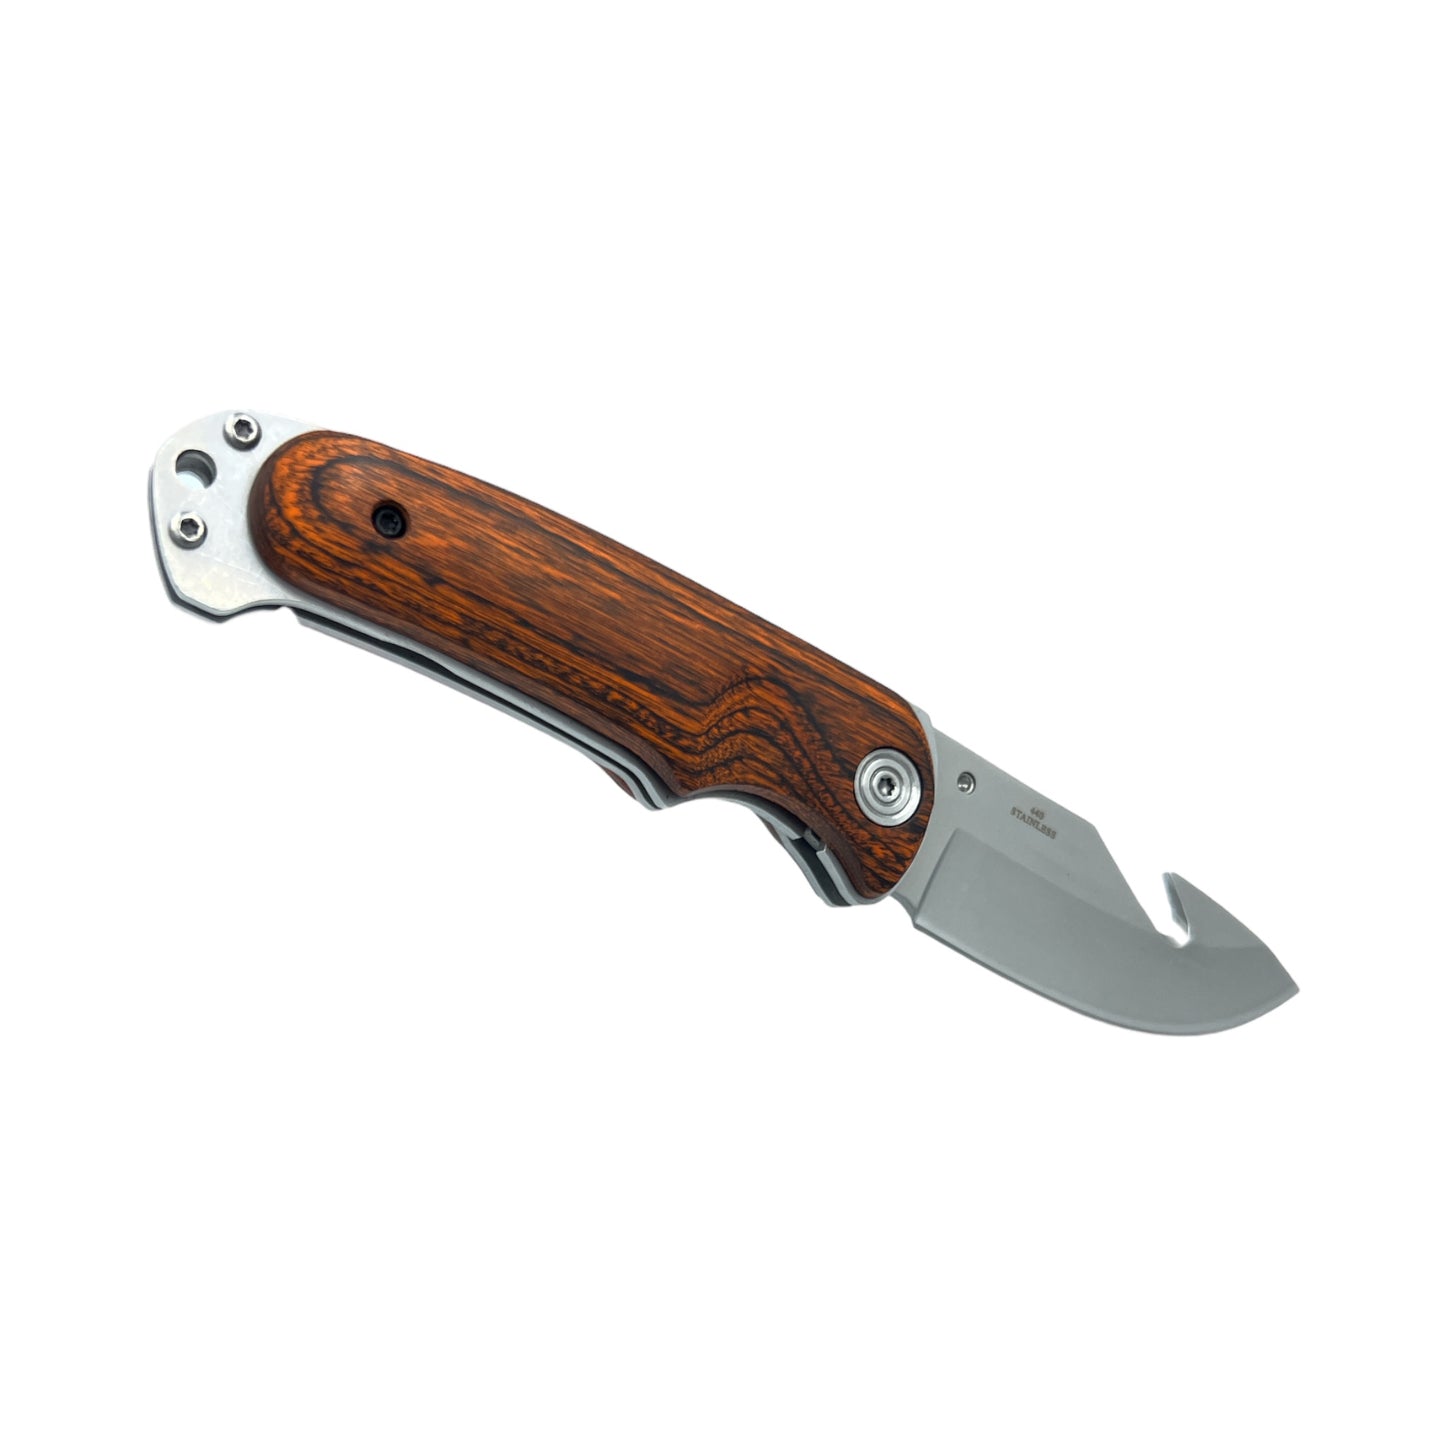 Whitetail Guthook Folding Knife - Pakka Wood Handle - 4 inch (9.5cm) Blade